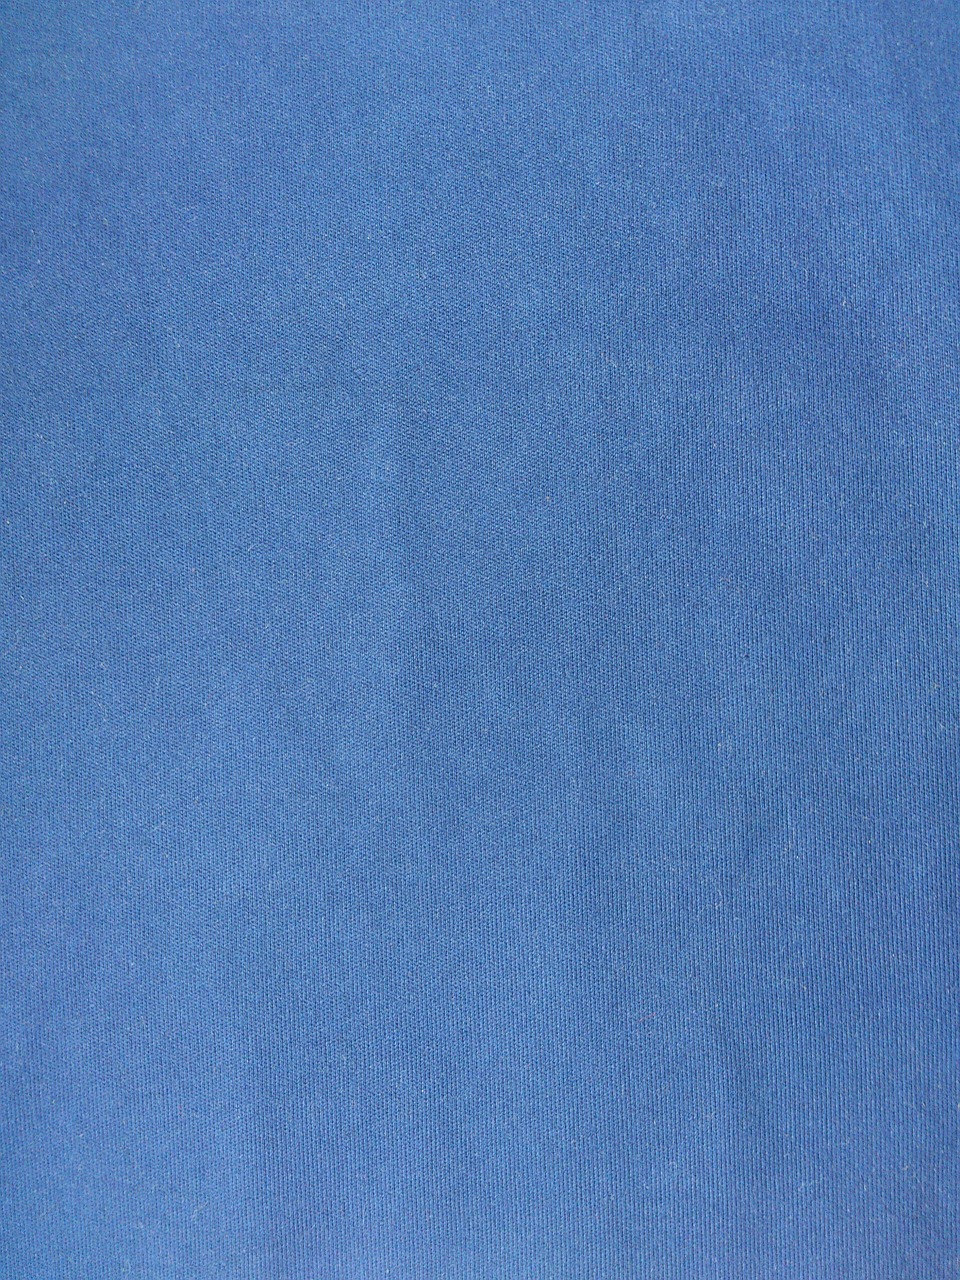 fabric blue velvet free photo